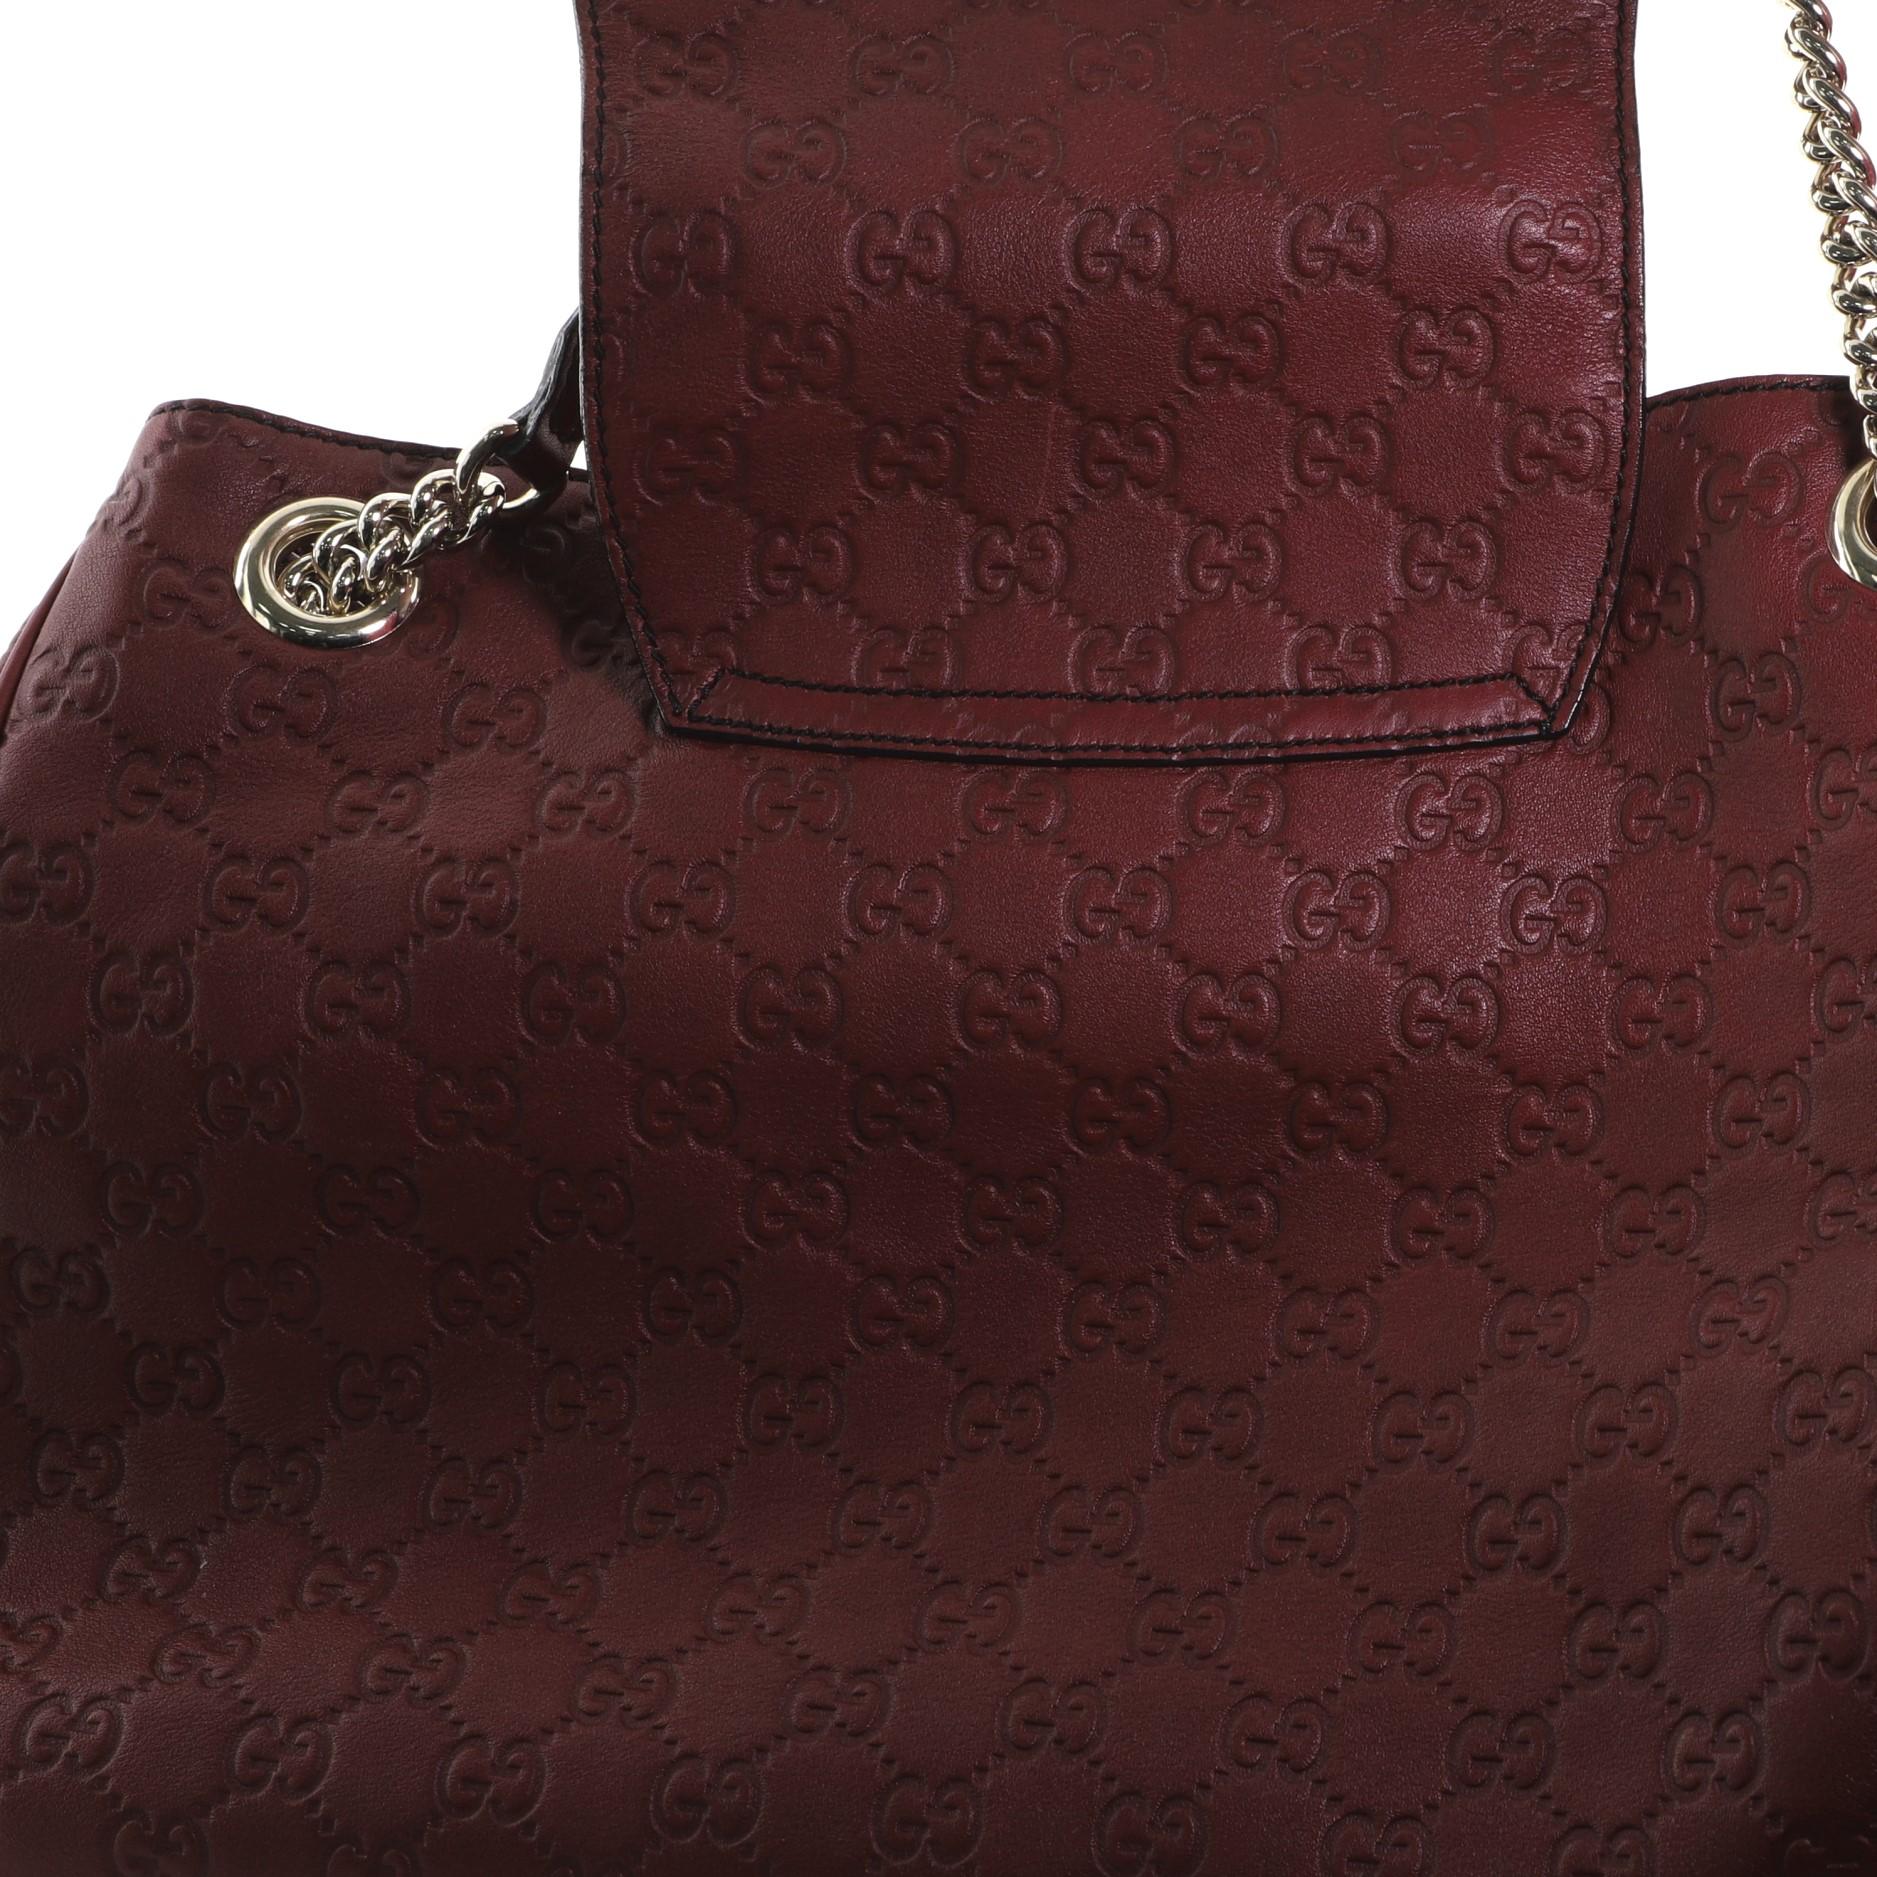 Gucci Emily Flap Shoulder Bag Guccissima Leather Large 5